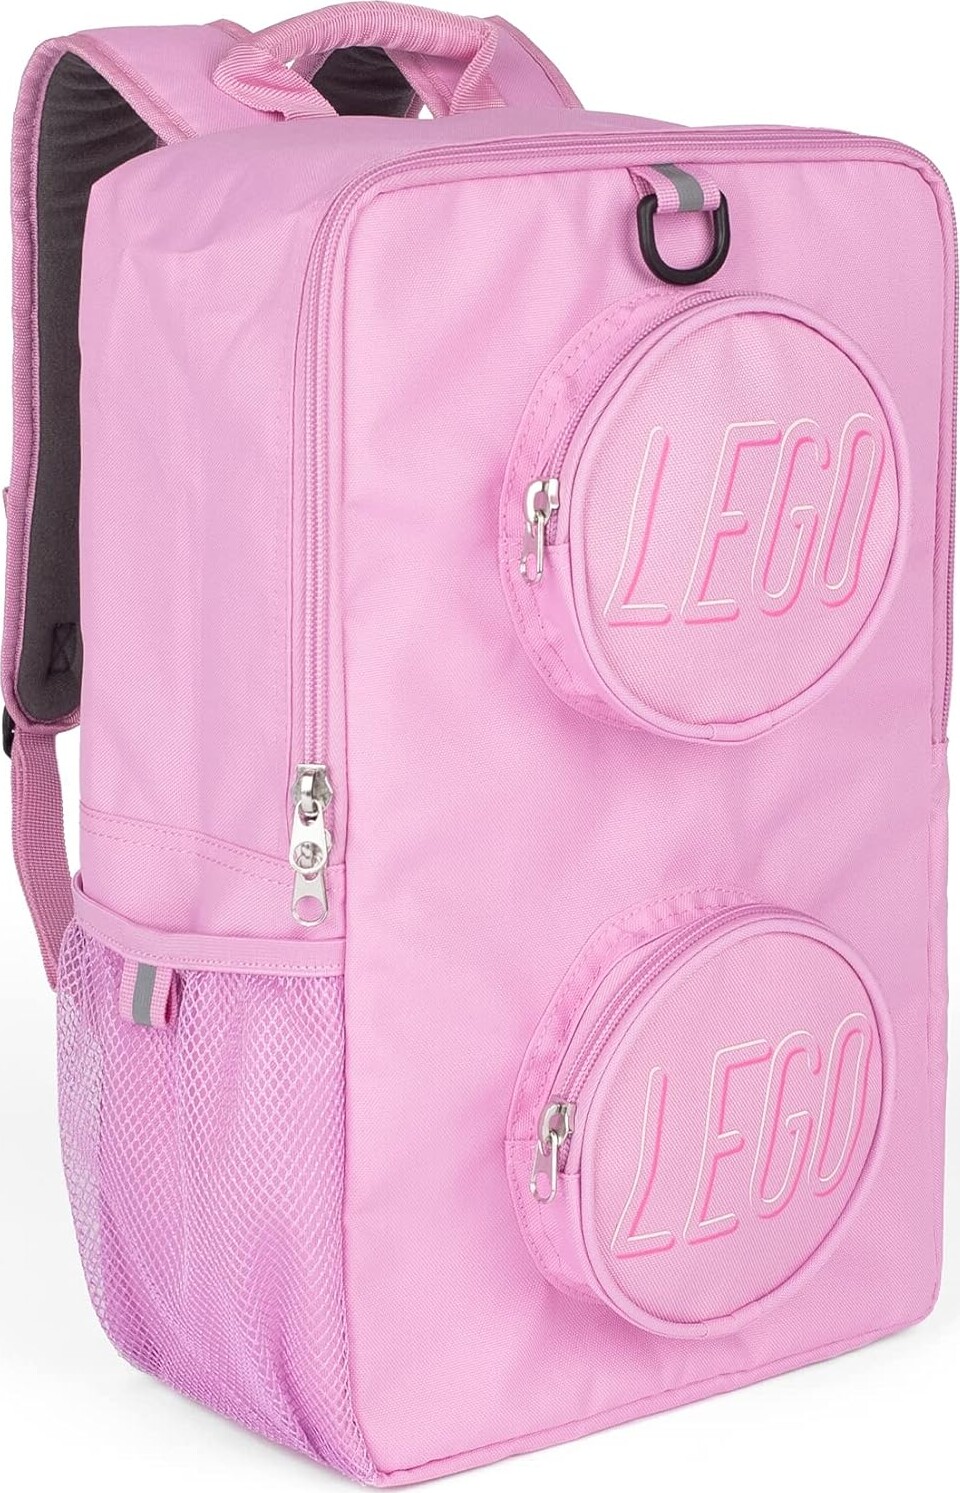 Lego - Brick Backpack (15 L) - Pink (4011090-bp0960-850bi)